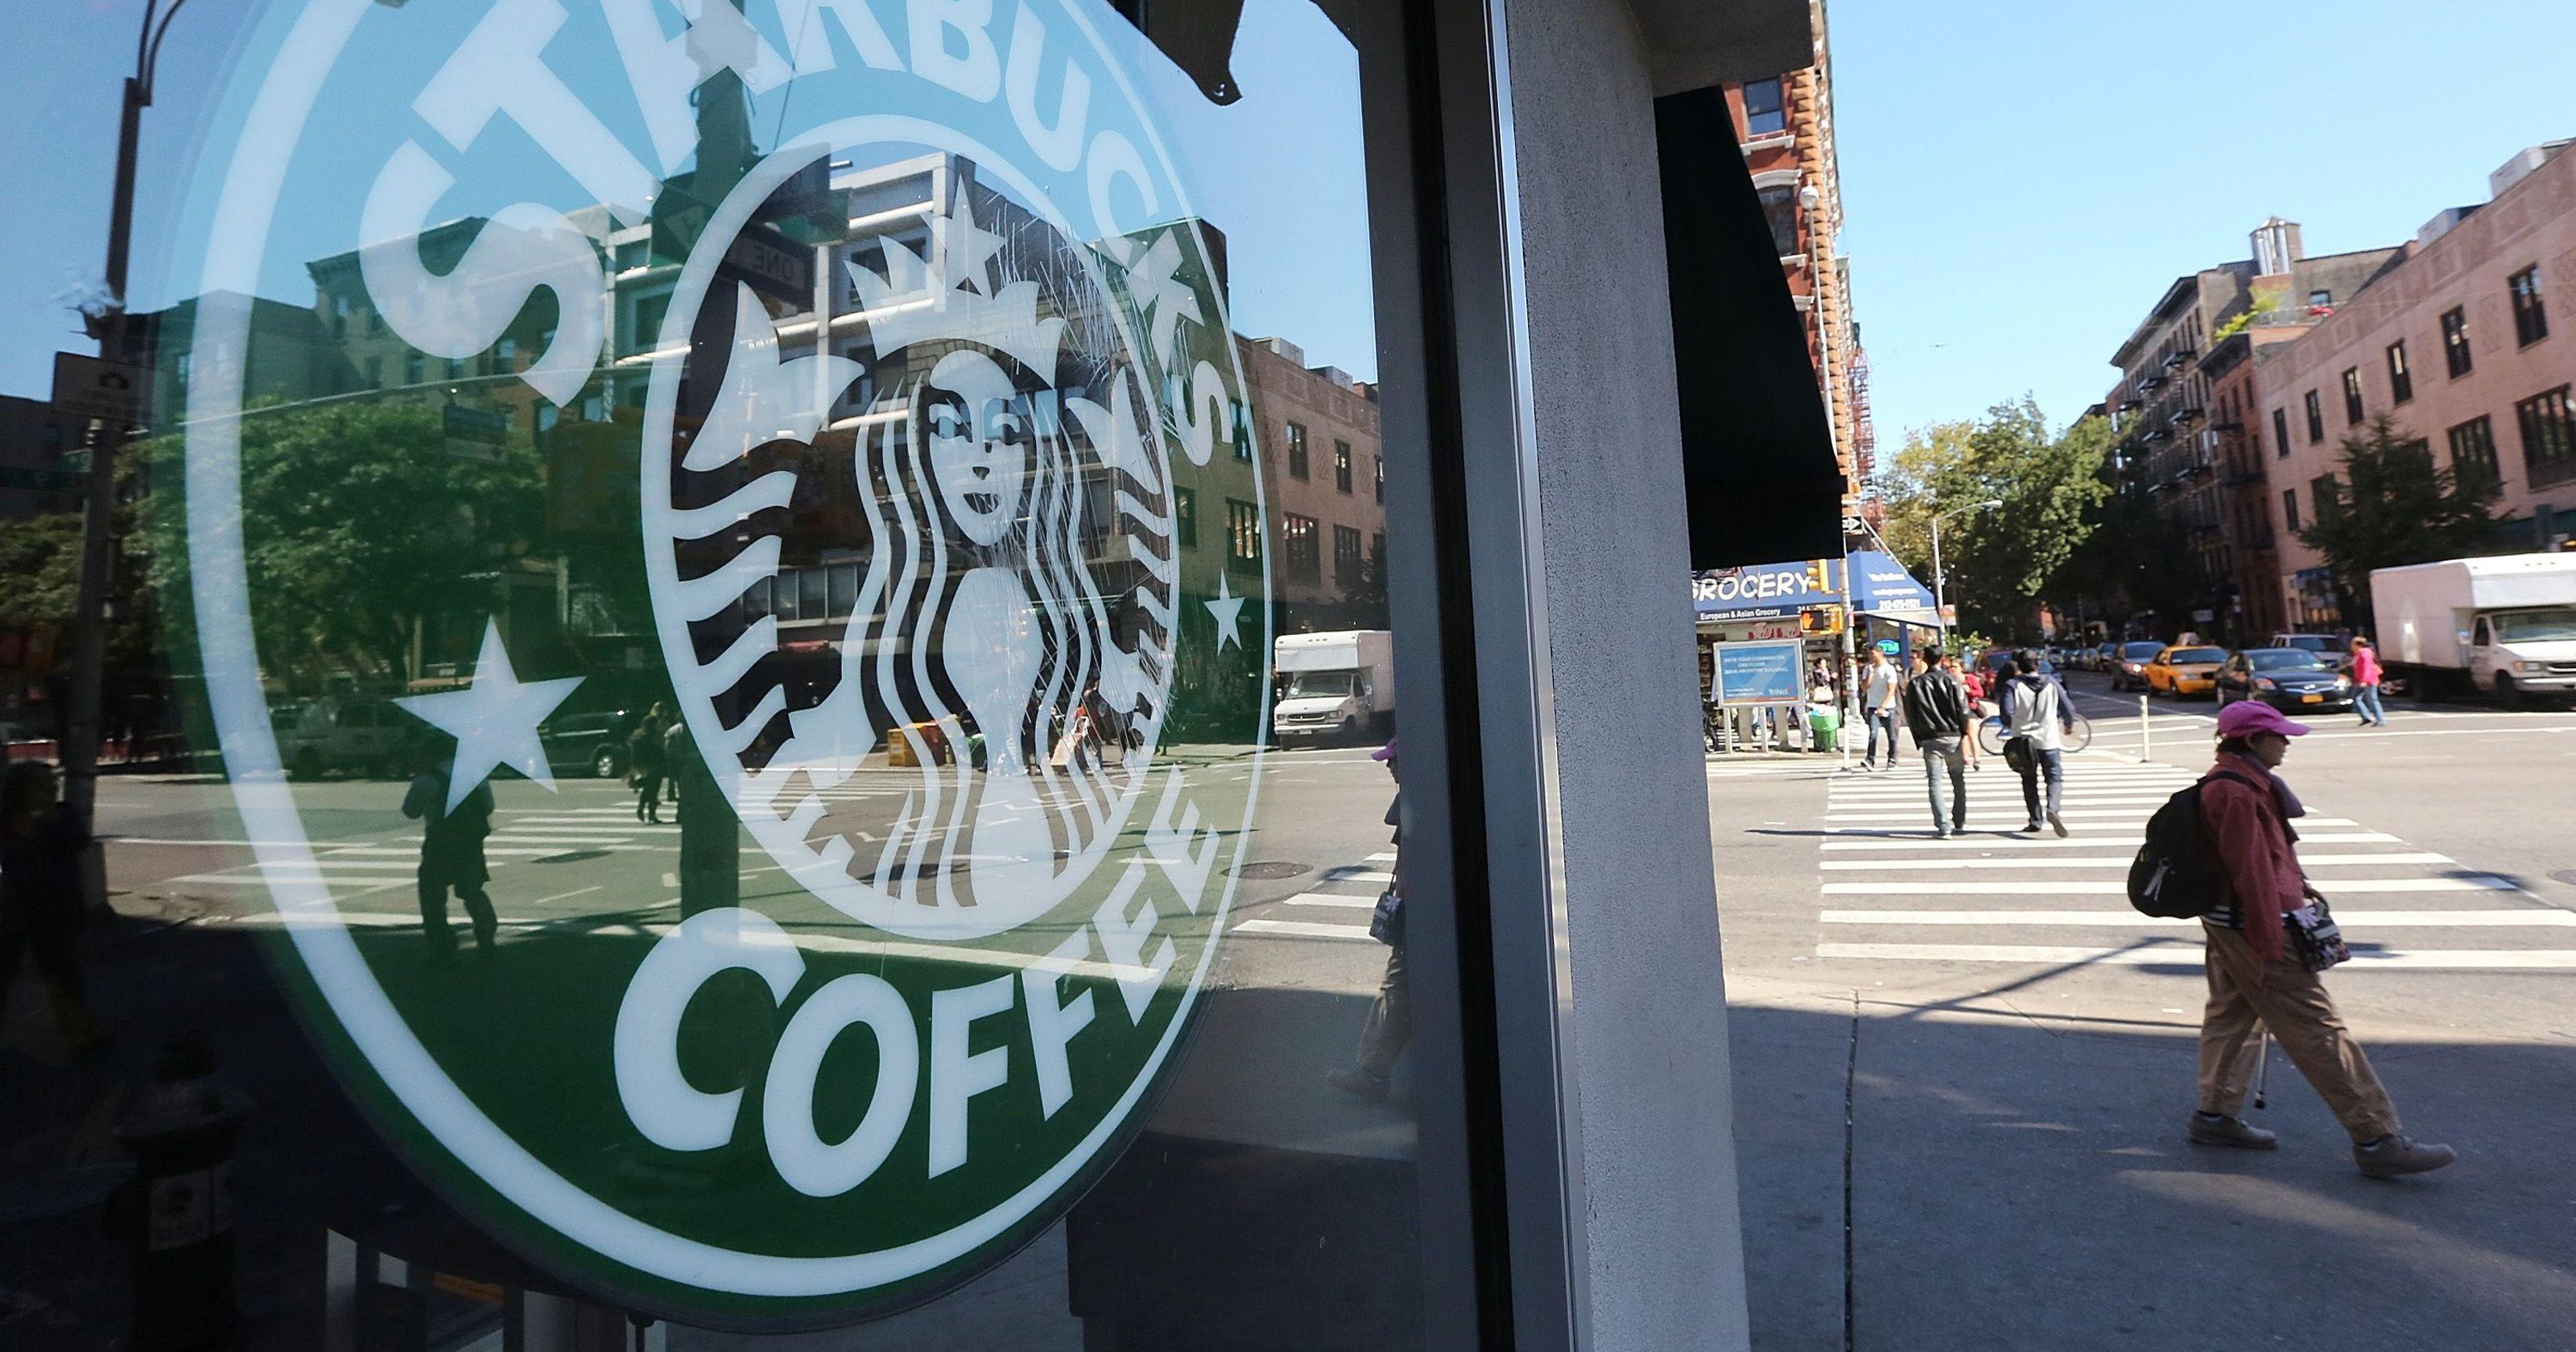 Dumb Starbucks Logo - Starbucks responds to Dumb Starbucks in L.A.